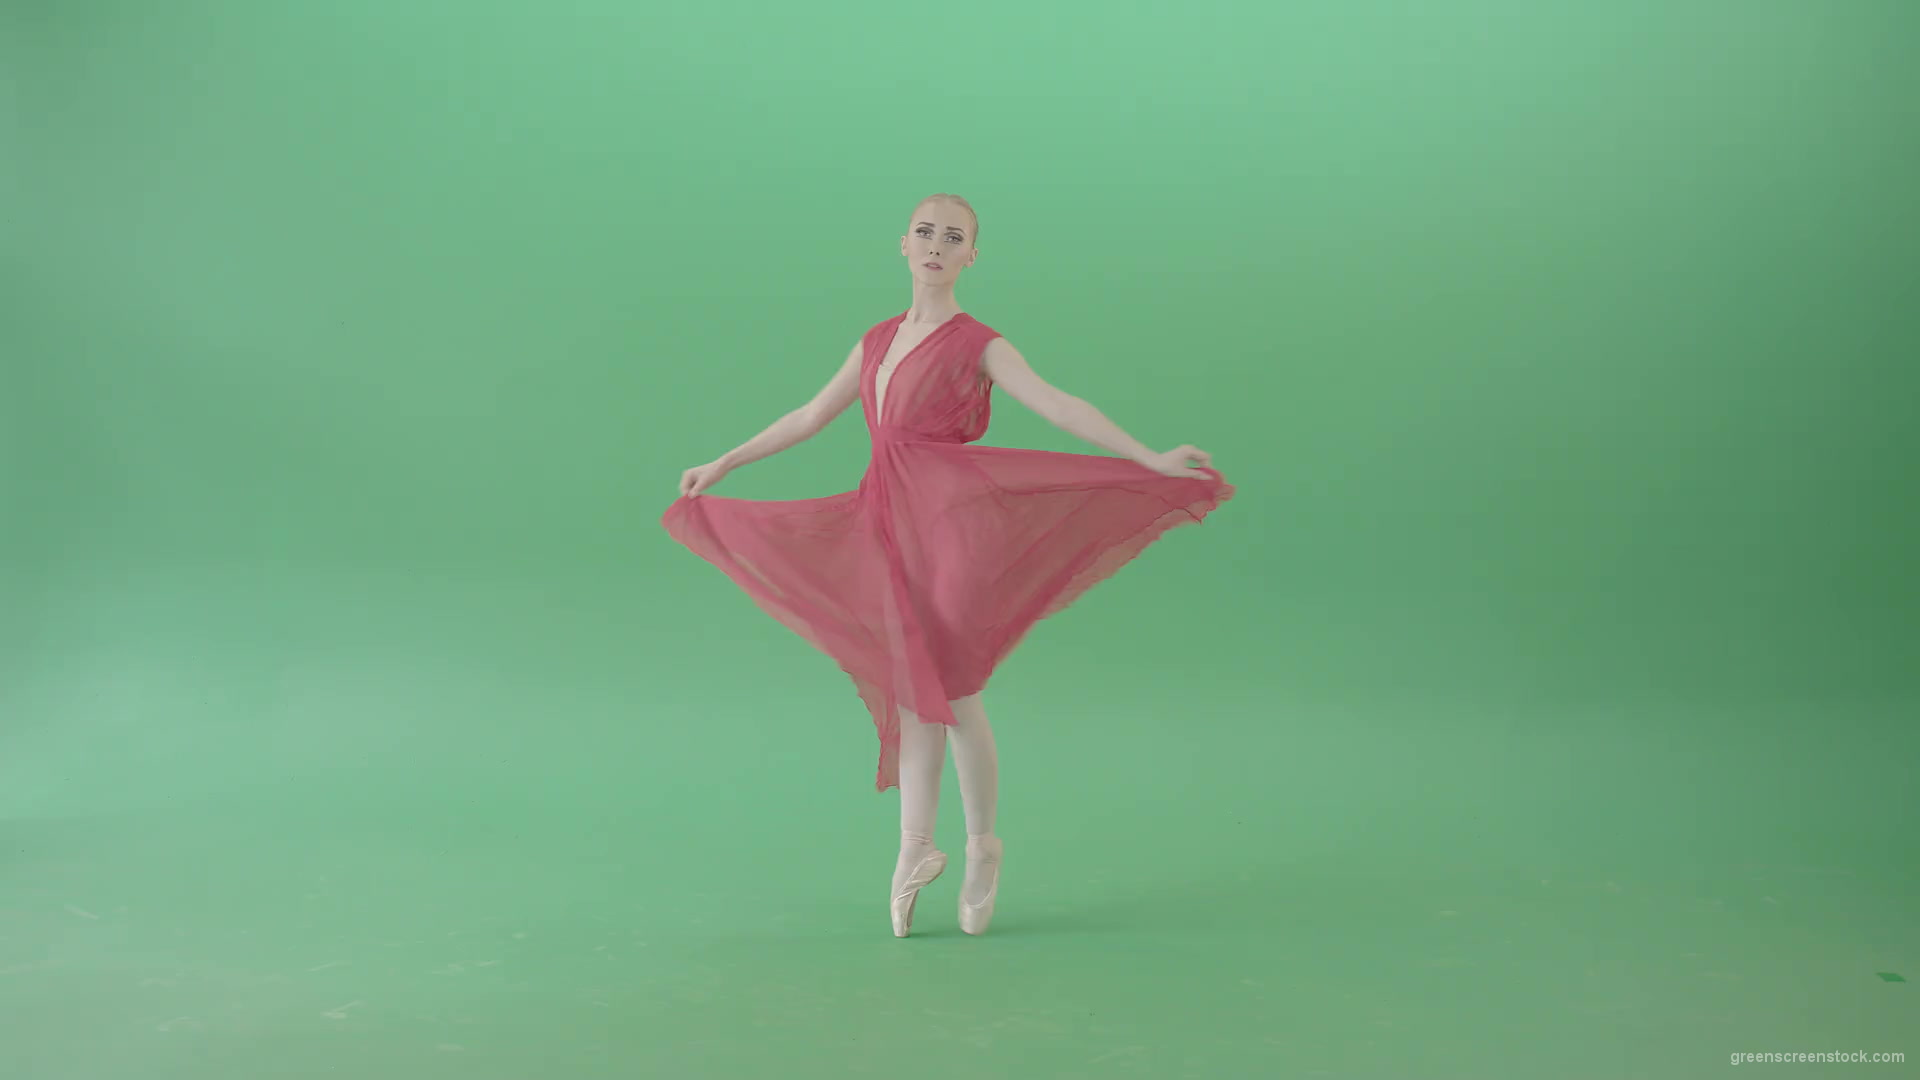 Light-Ballet-dancing-girl-in-red-wind-dress-spinning-on-green-screen-4K-Video-Footage-1920_001 Green Screen Stock